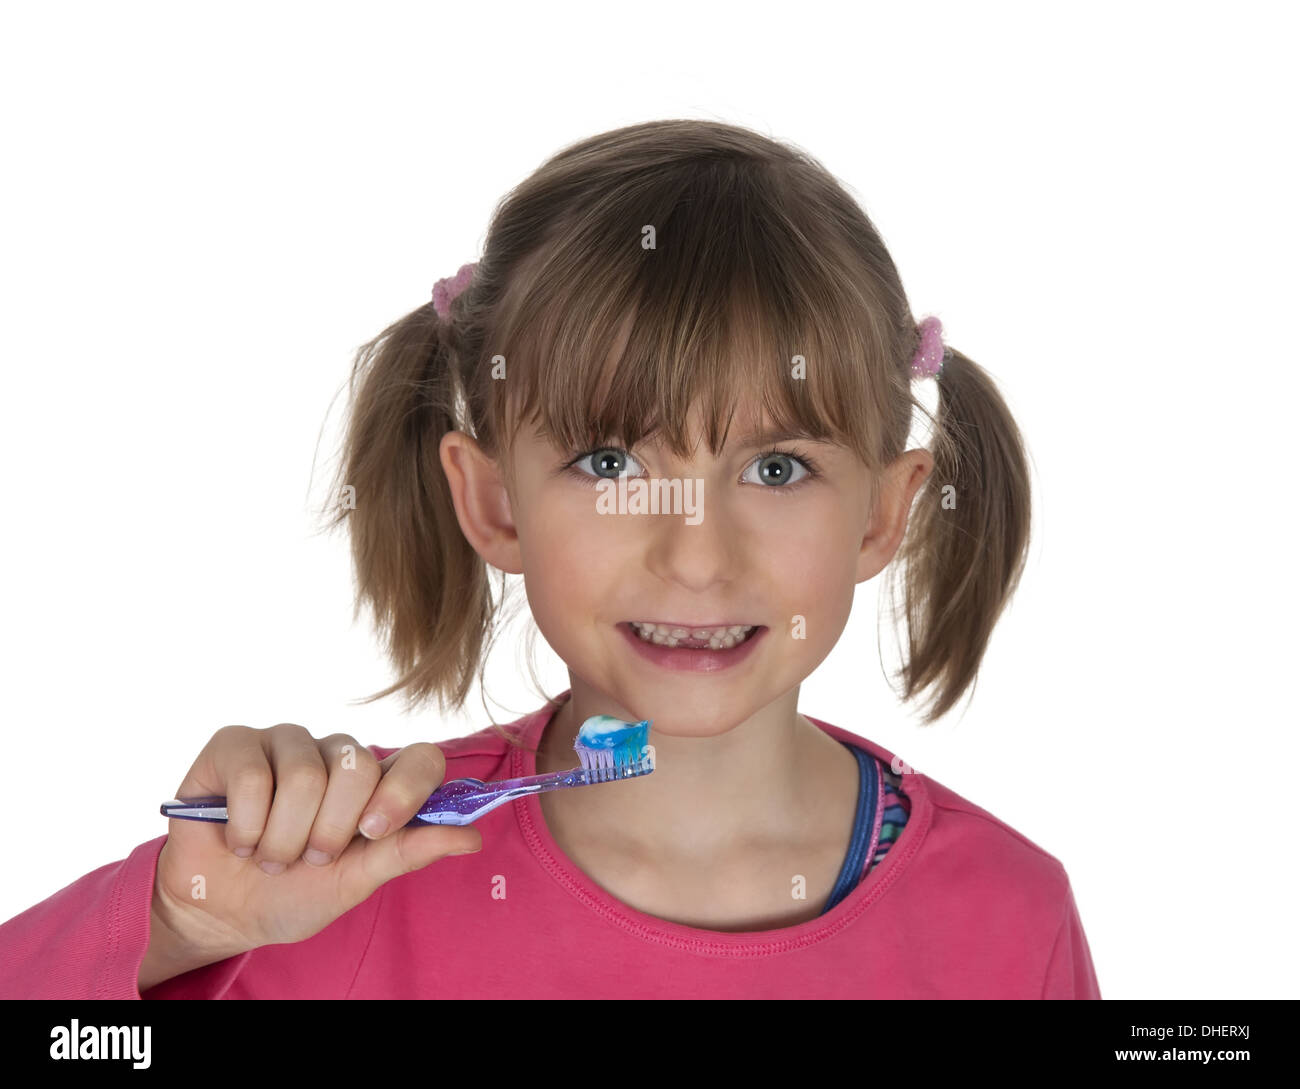 girl brushing teeth Stock Photo